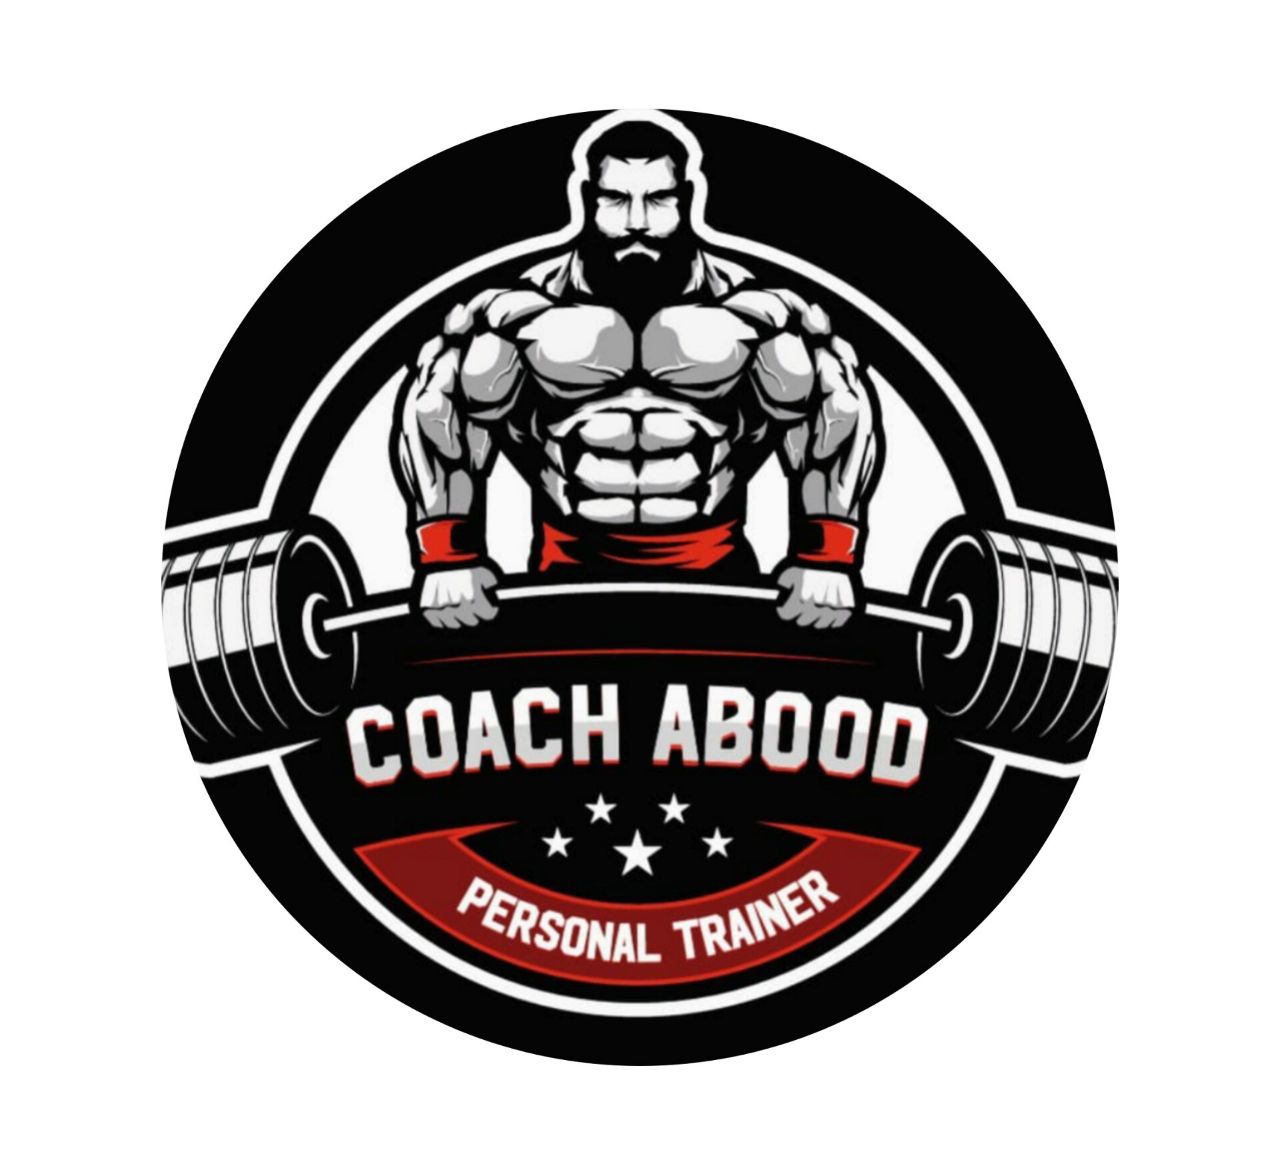 Coach Abood